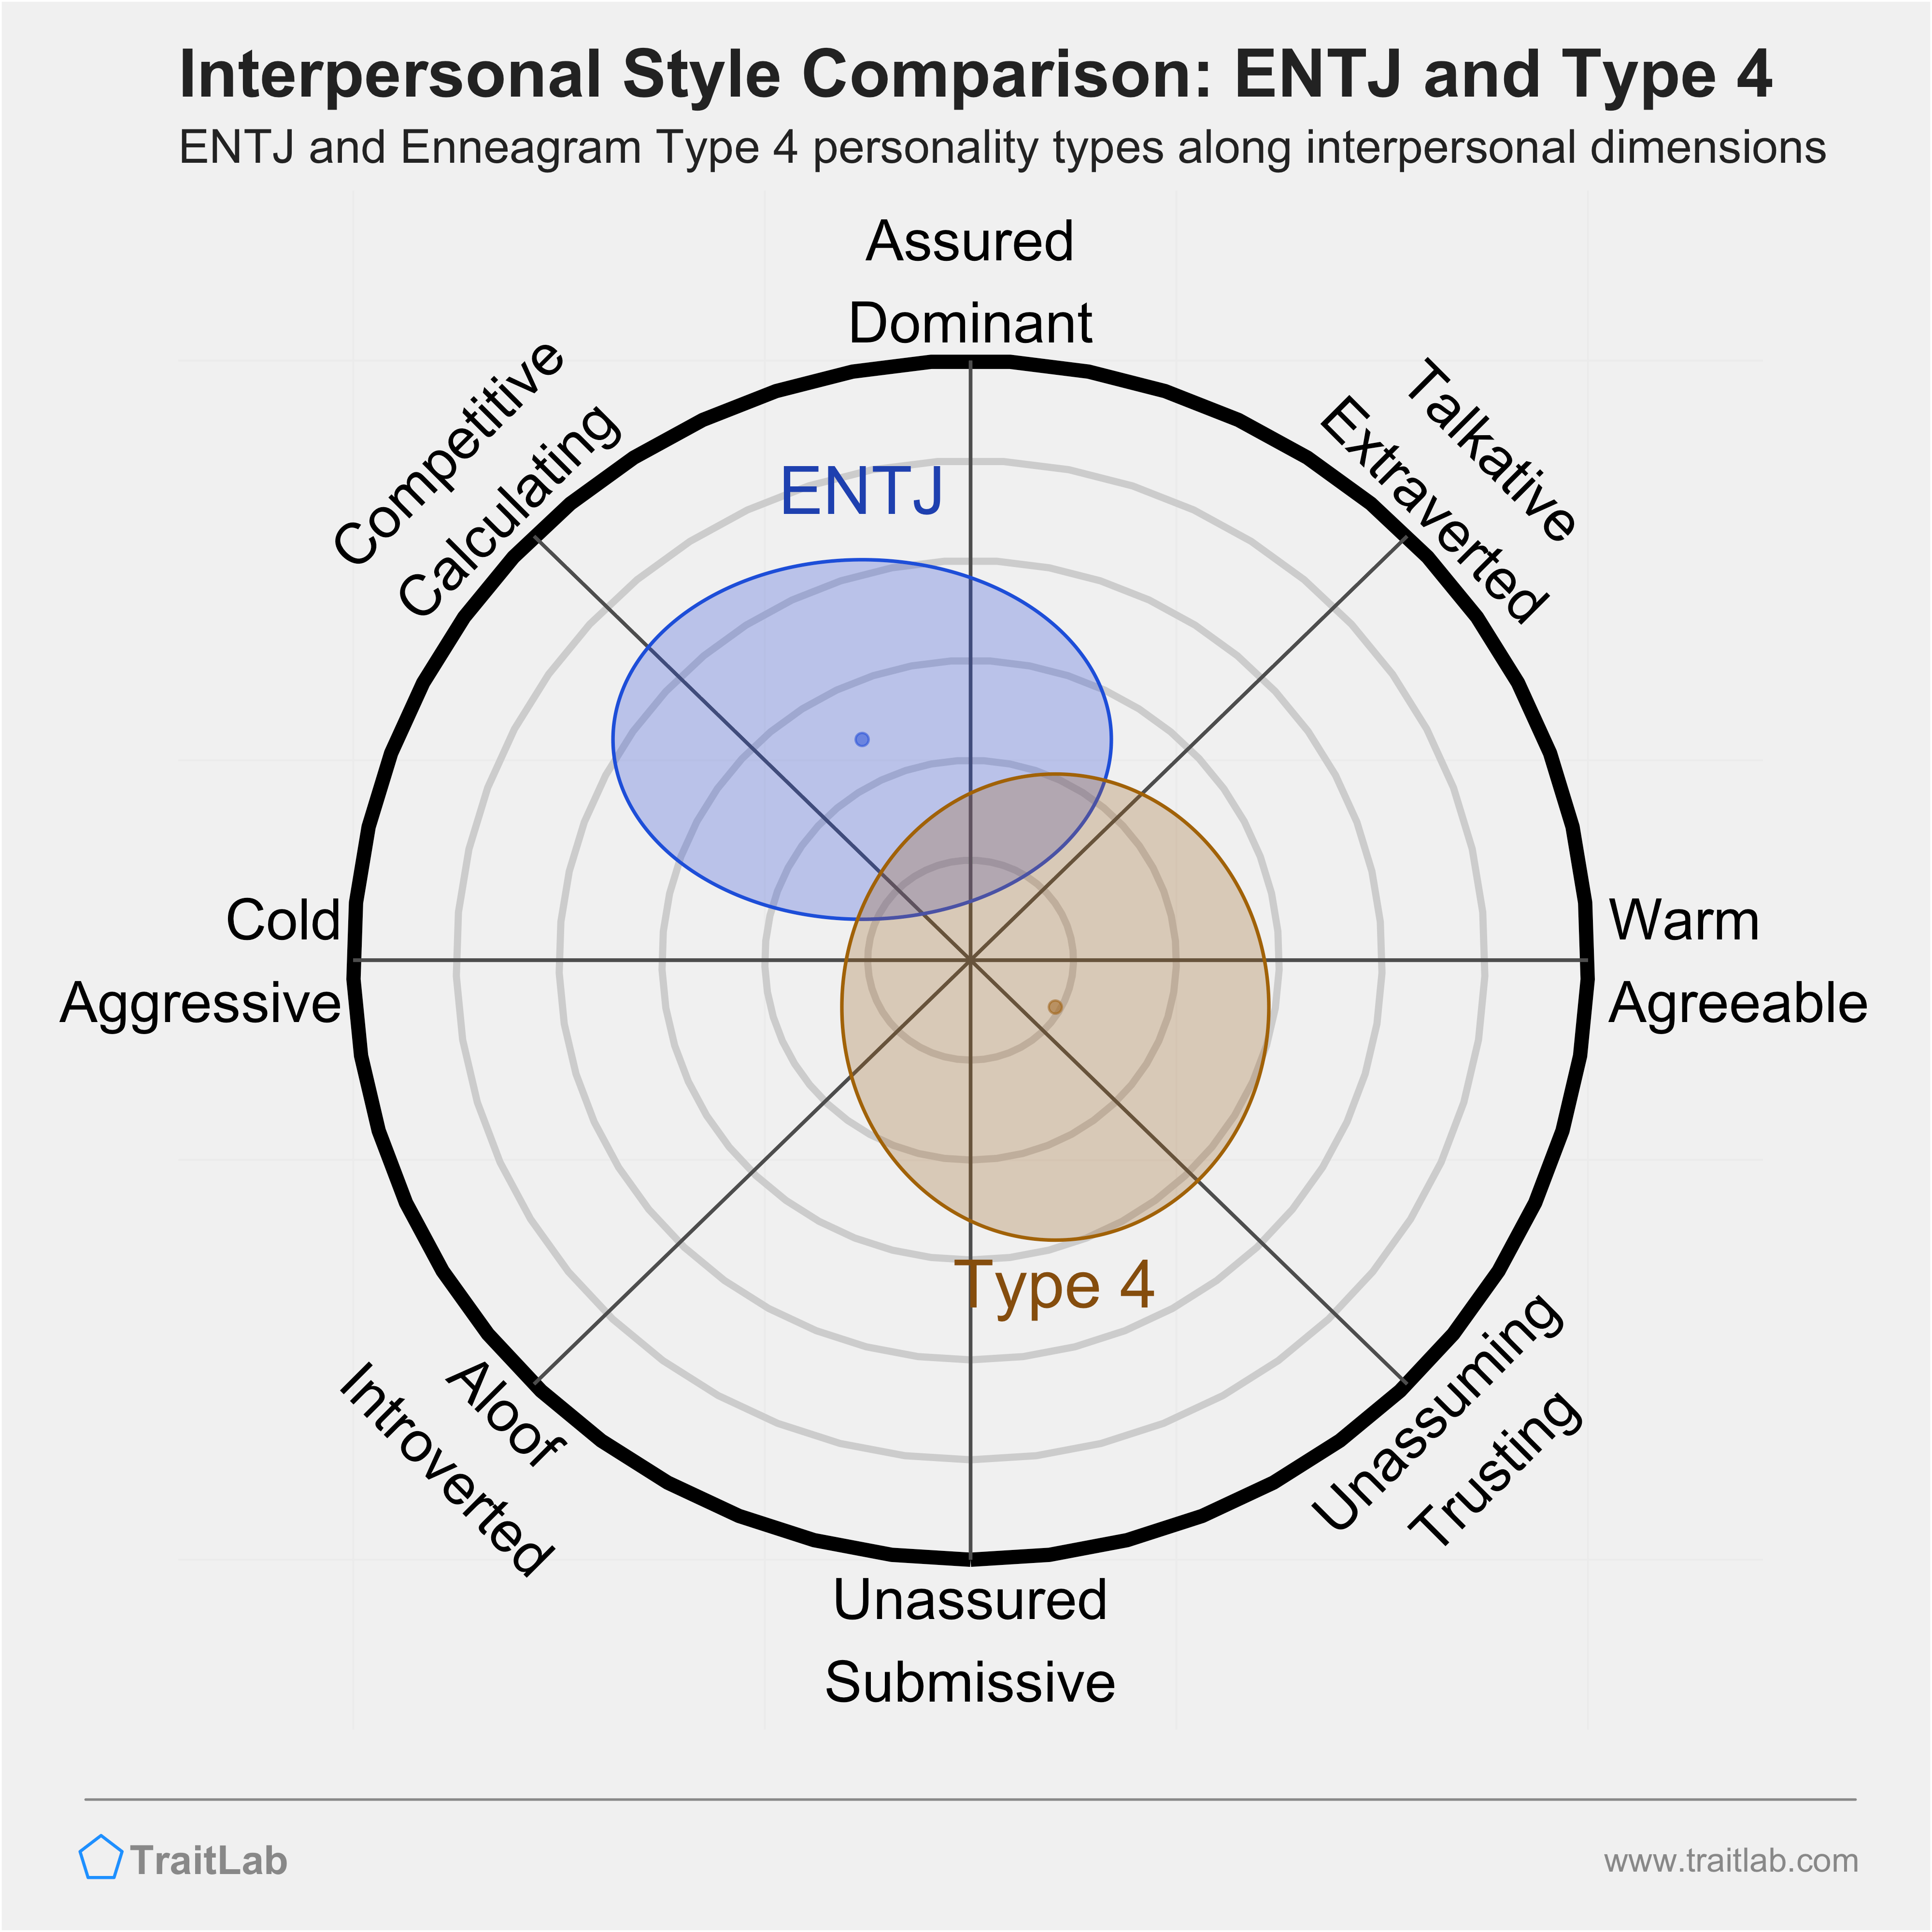 Enneagram ENTJ and Type 4 comparison across interpersonal dimensions